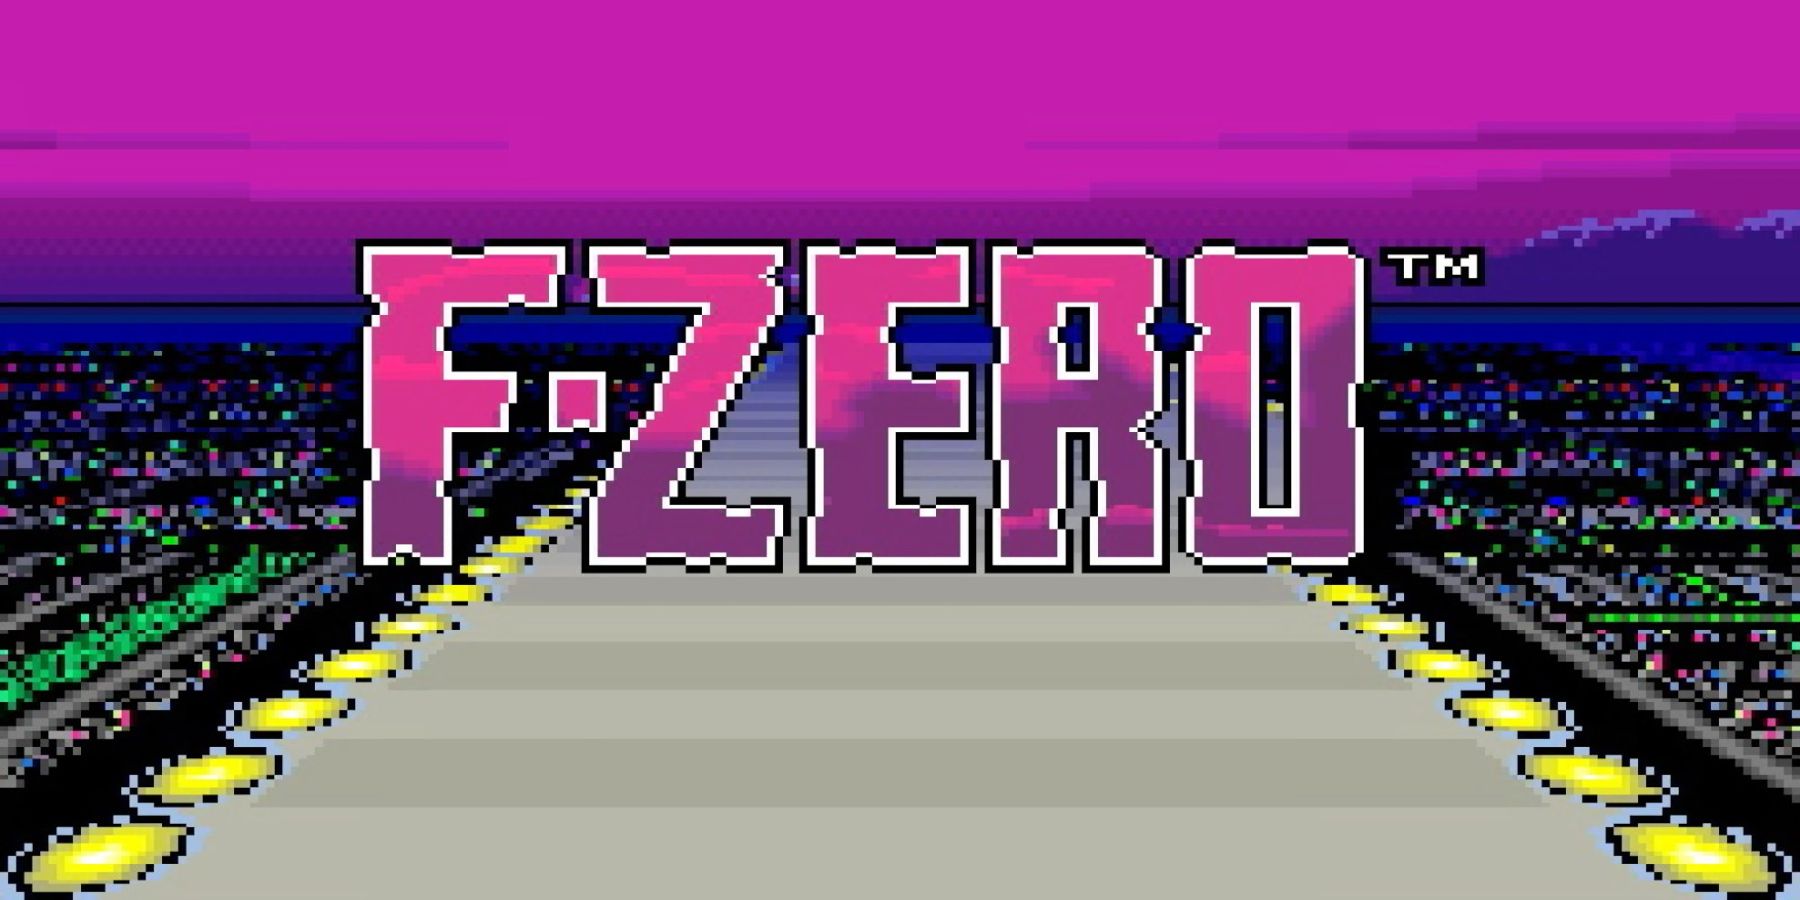 f-zero original game logo